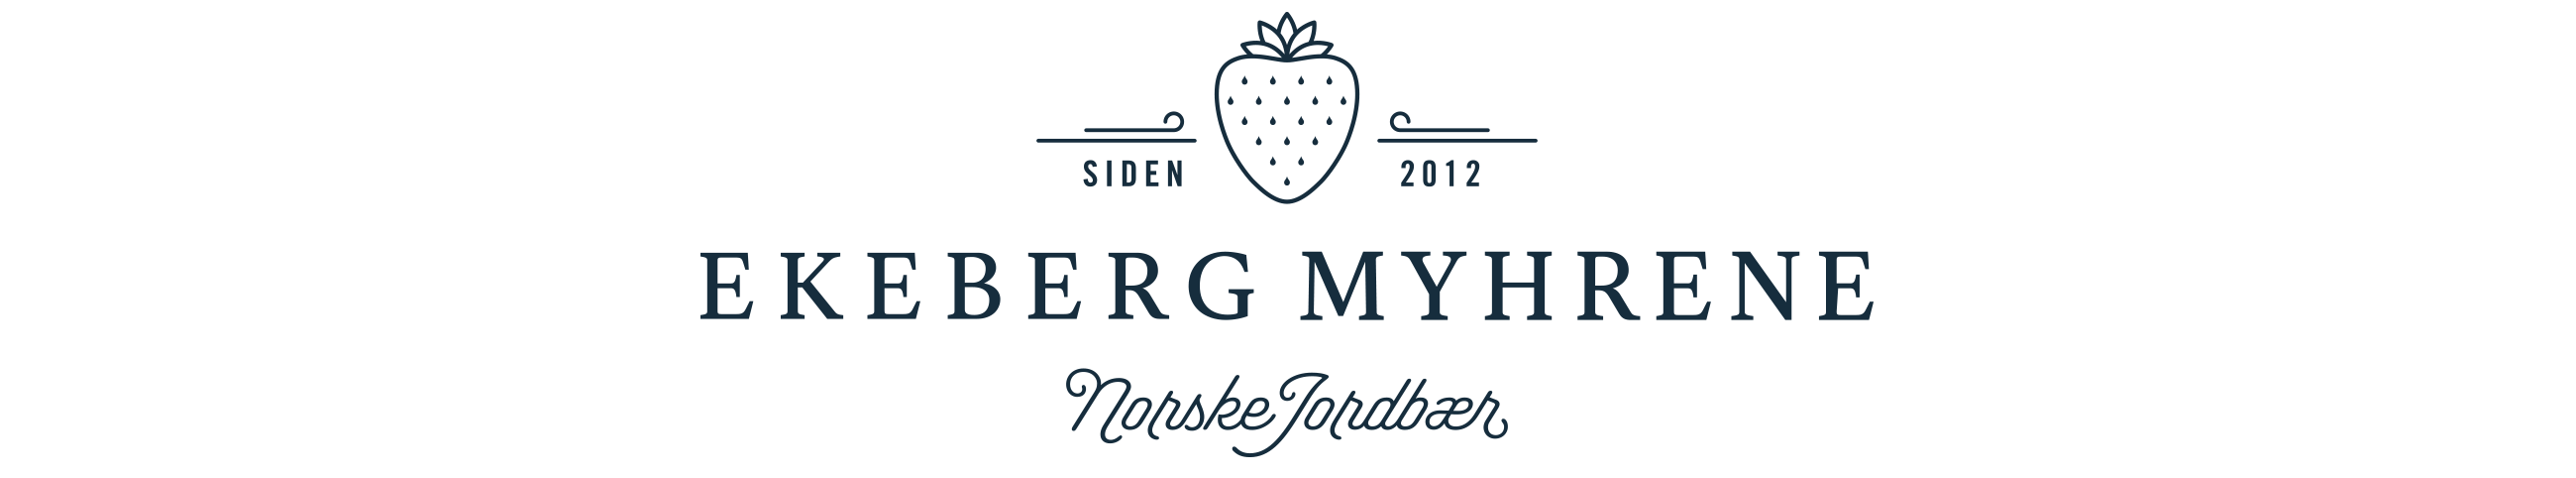 Ekeberg Myhrene logo norske jordbær strawberries. Visuell identitet Visual identity.